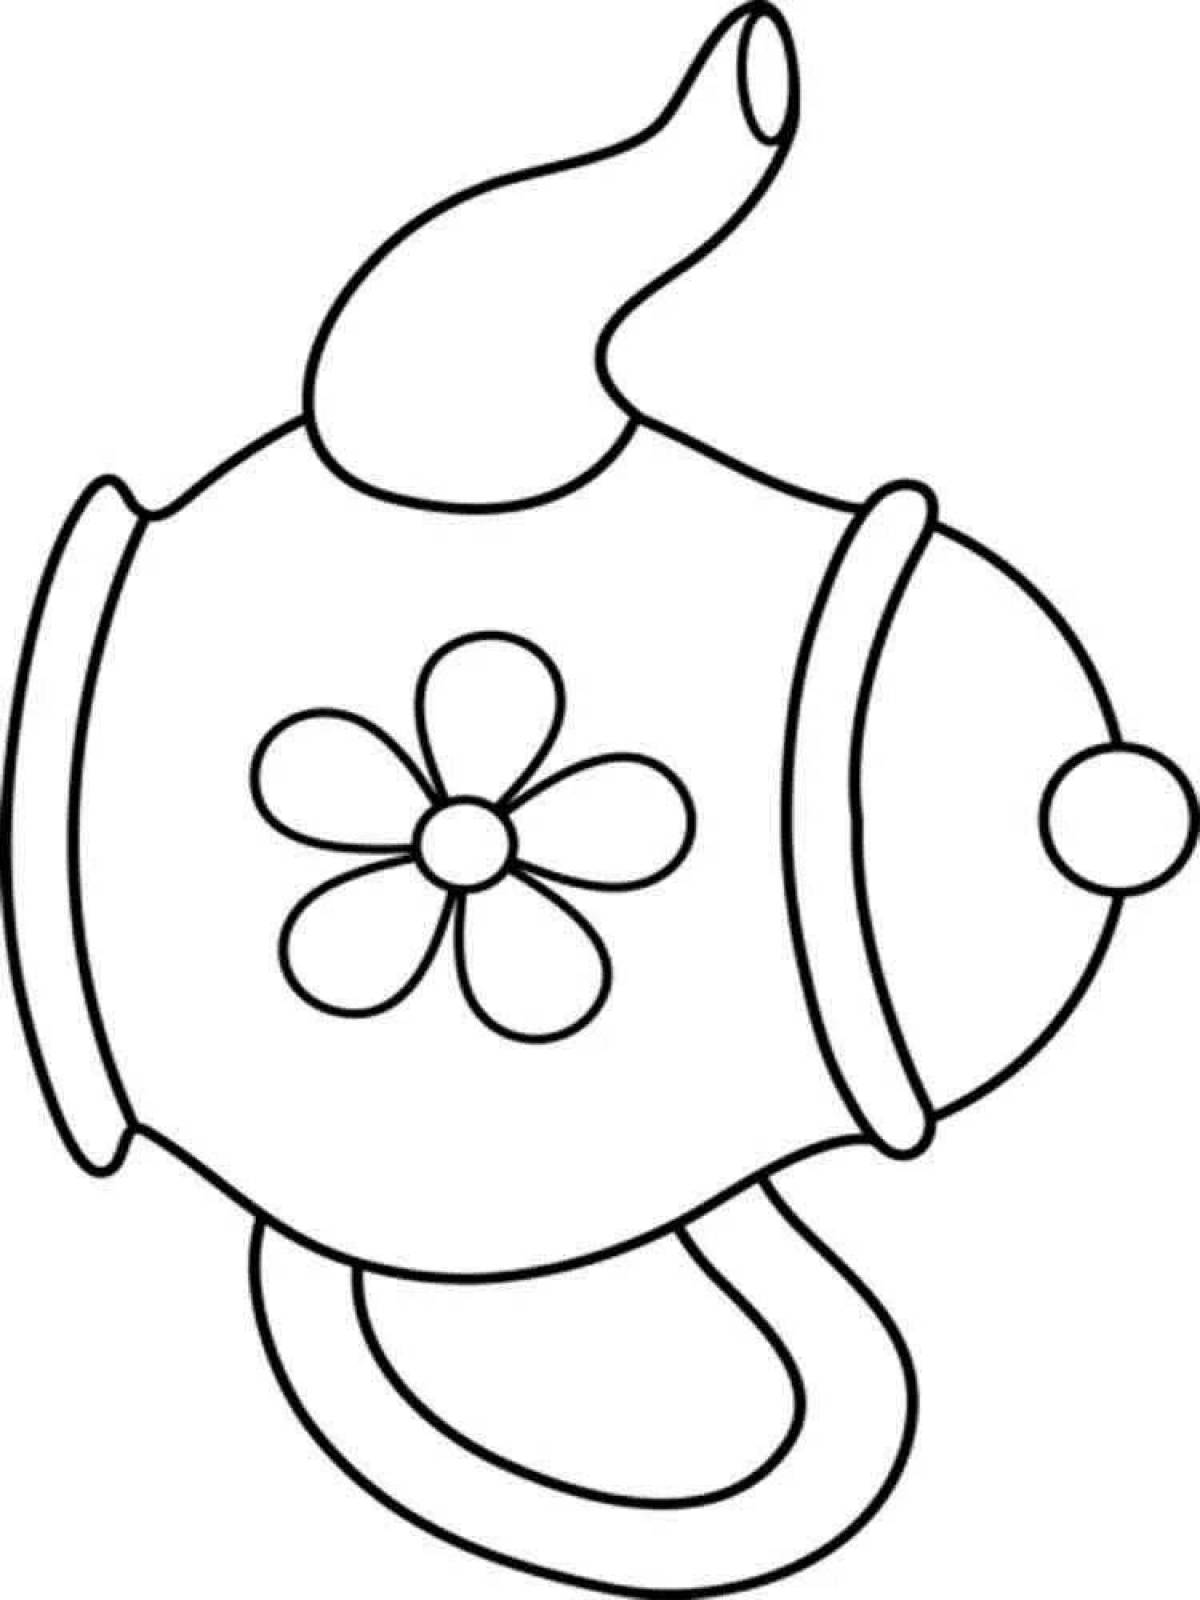 Fantastic teapot coloring book for kids